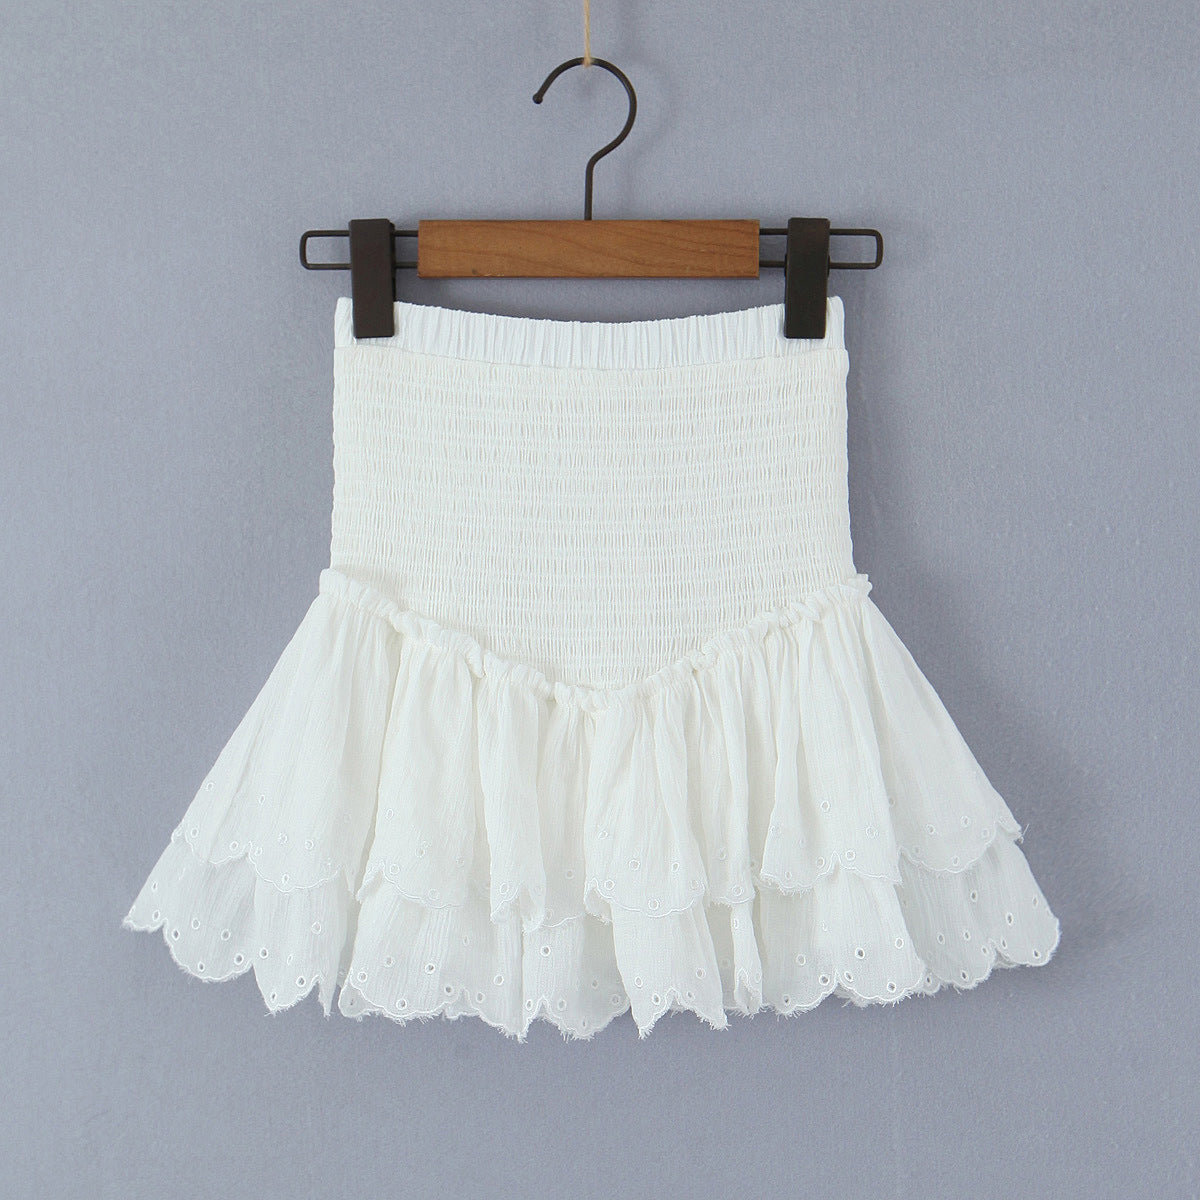 Ethereal Ballerina Layer Skirt